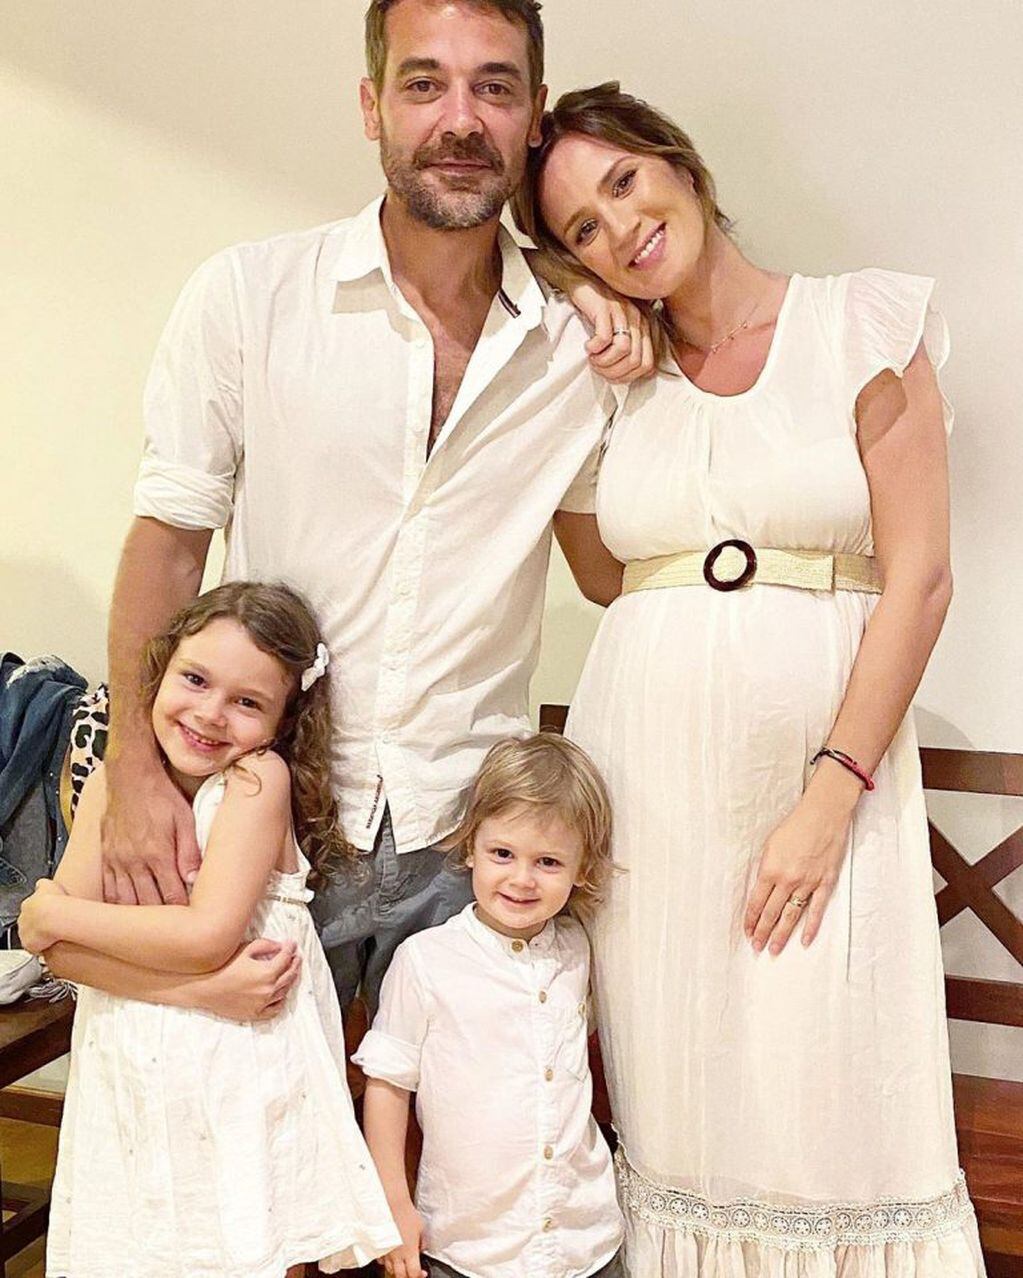 Paula Chaves y Pedro Alfonso junto a sus hijos. (Instagram/@chavespauok)